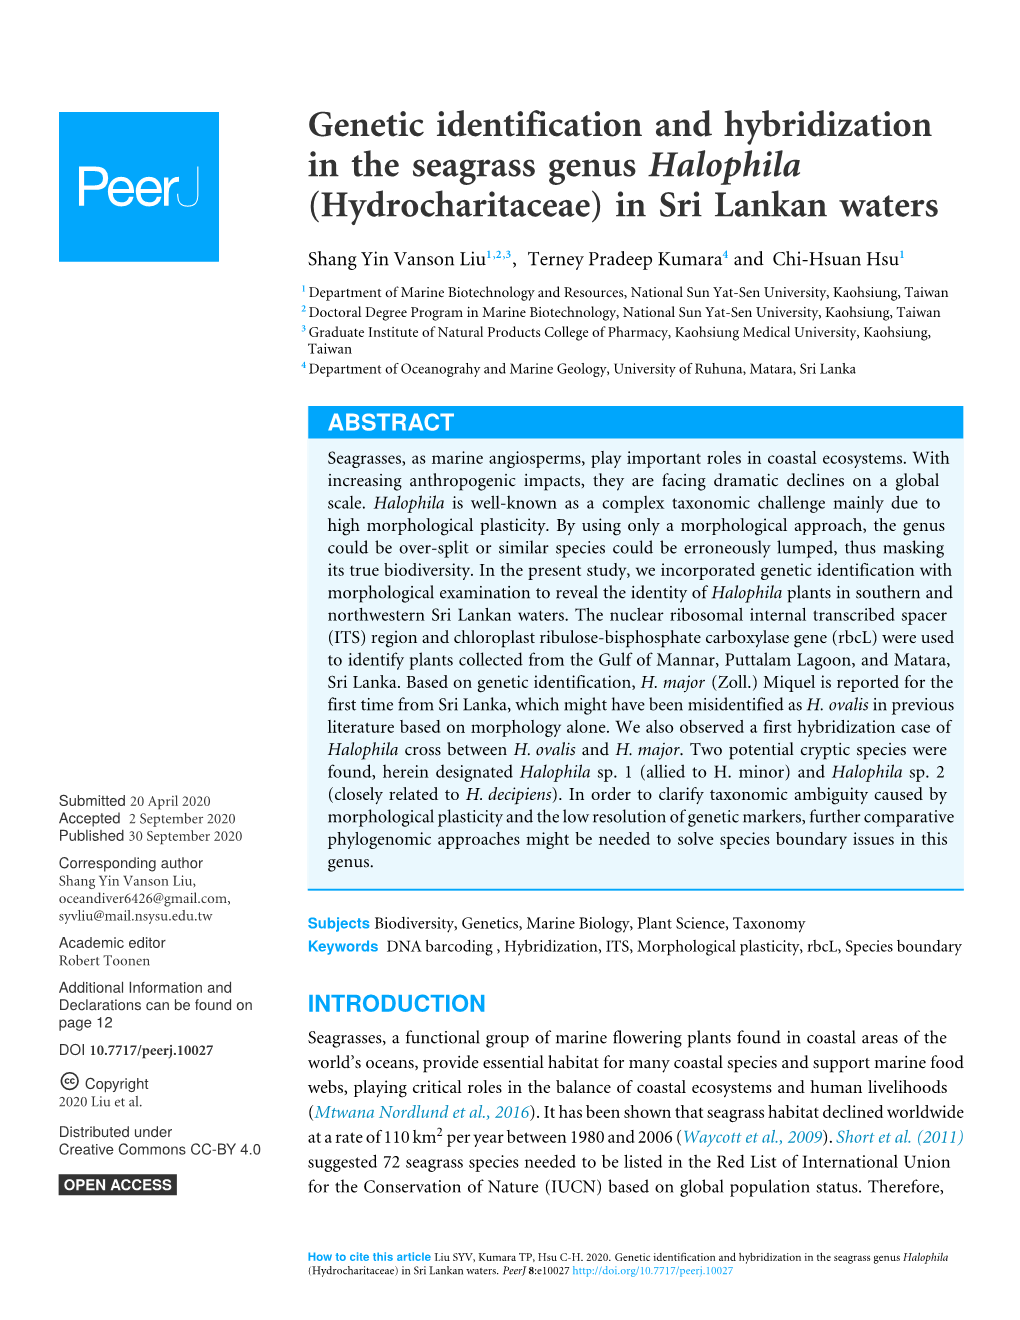 Genetic Identification and Hybridization in the Seagrass Genus Halophila (Hydrocharitaceae) in Sri Lankan Waters